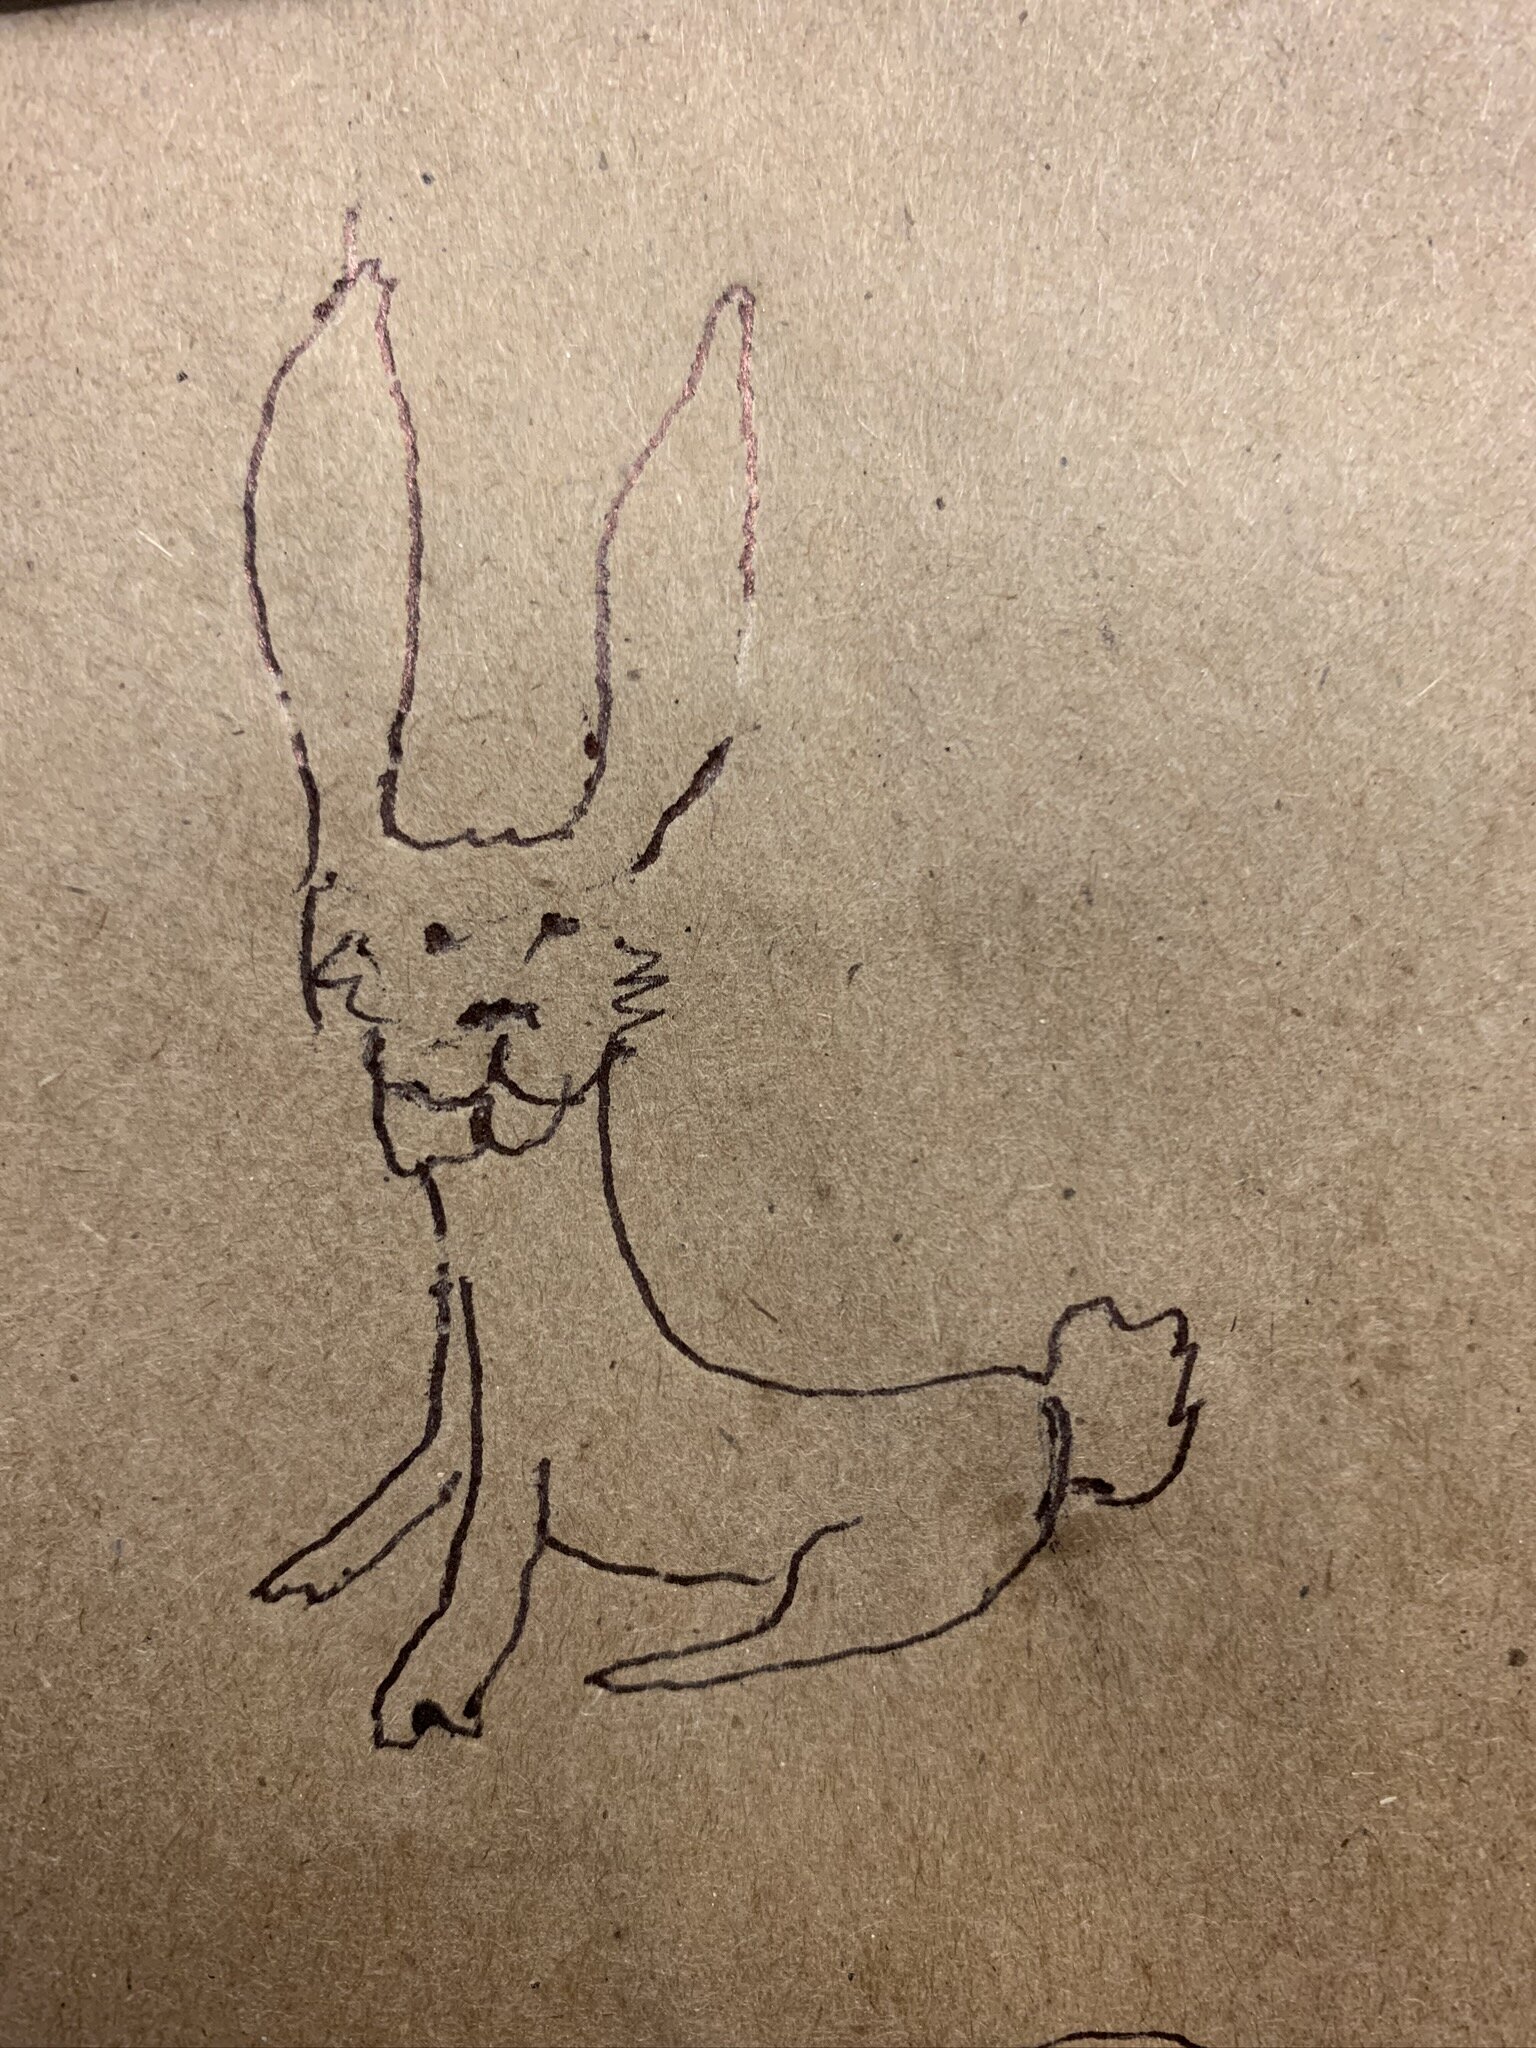 A Bunny Rabbit by Jimmy Gentry